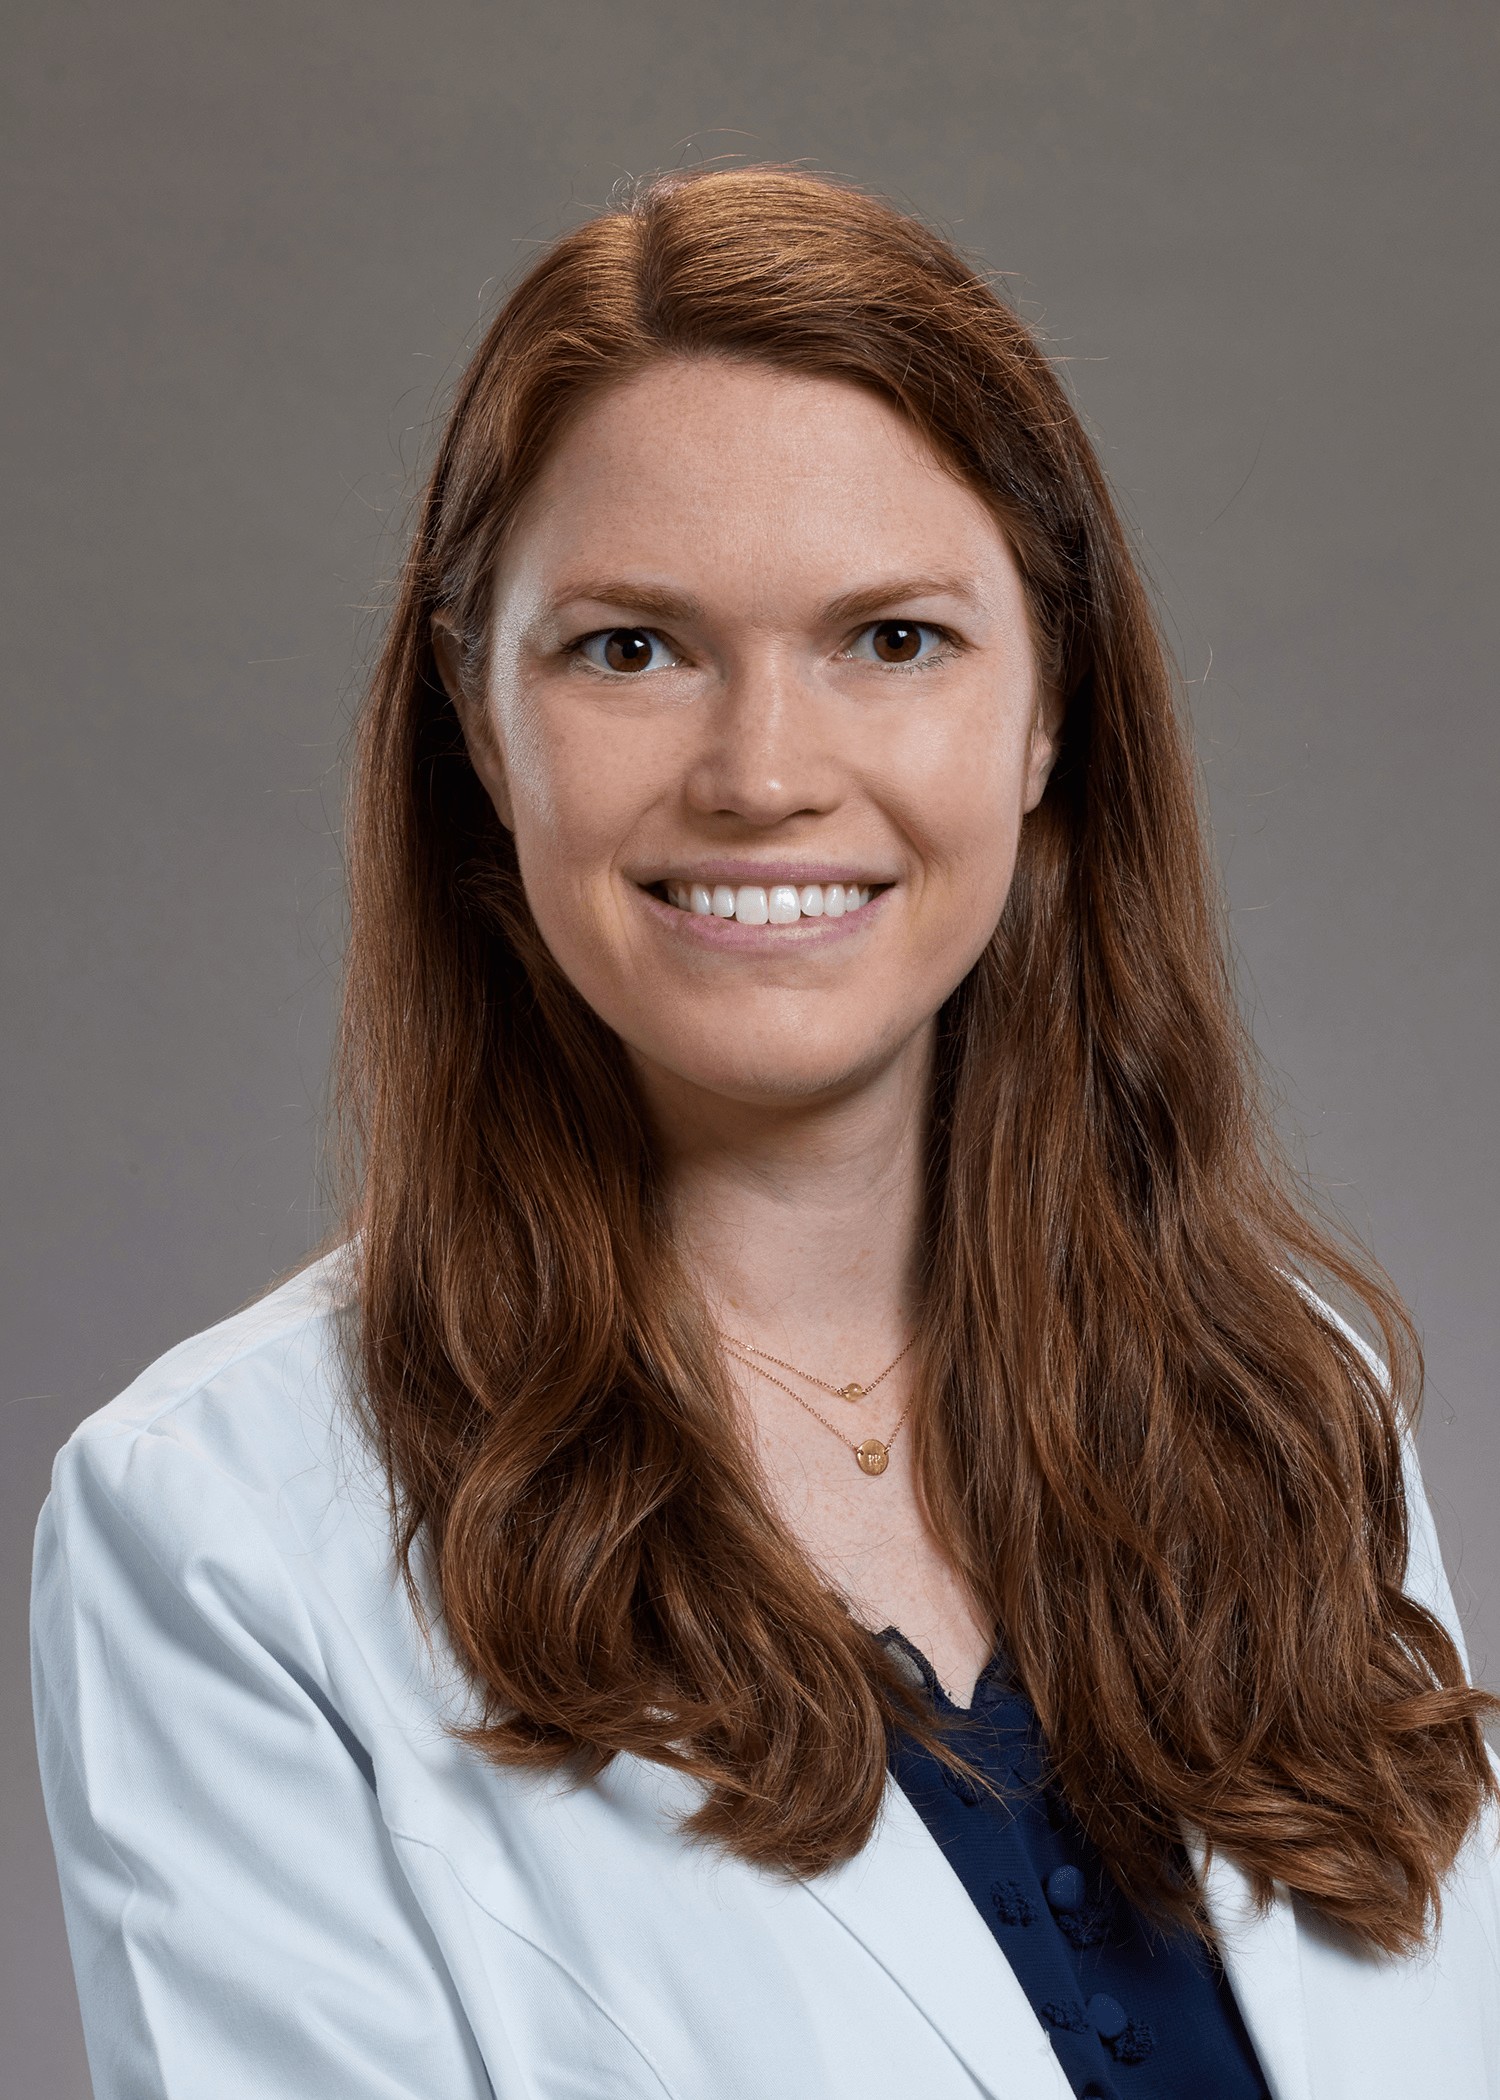 Kelsey A. Harman, Cardiologist at Padder Health